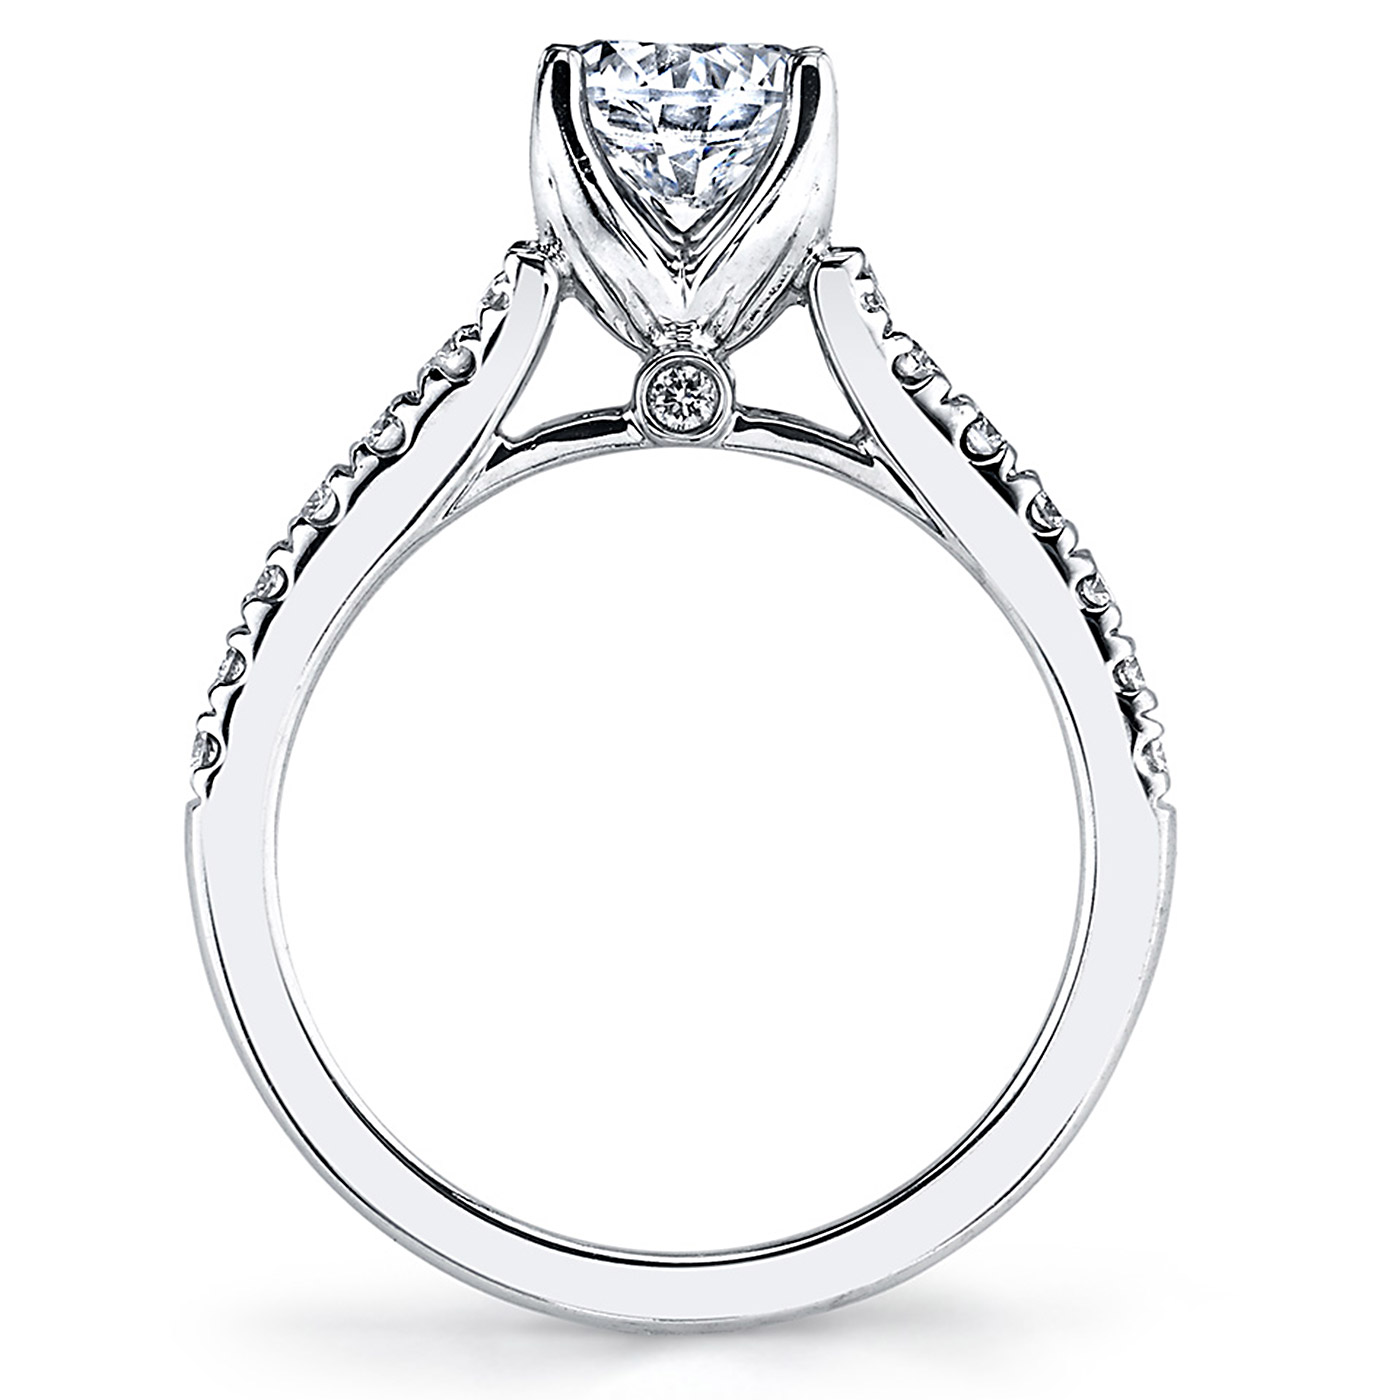 Parade New Classic 14 Karat Diamond Engagement Ring R3935 Alternative View 1